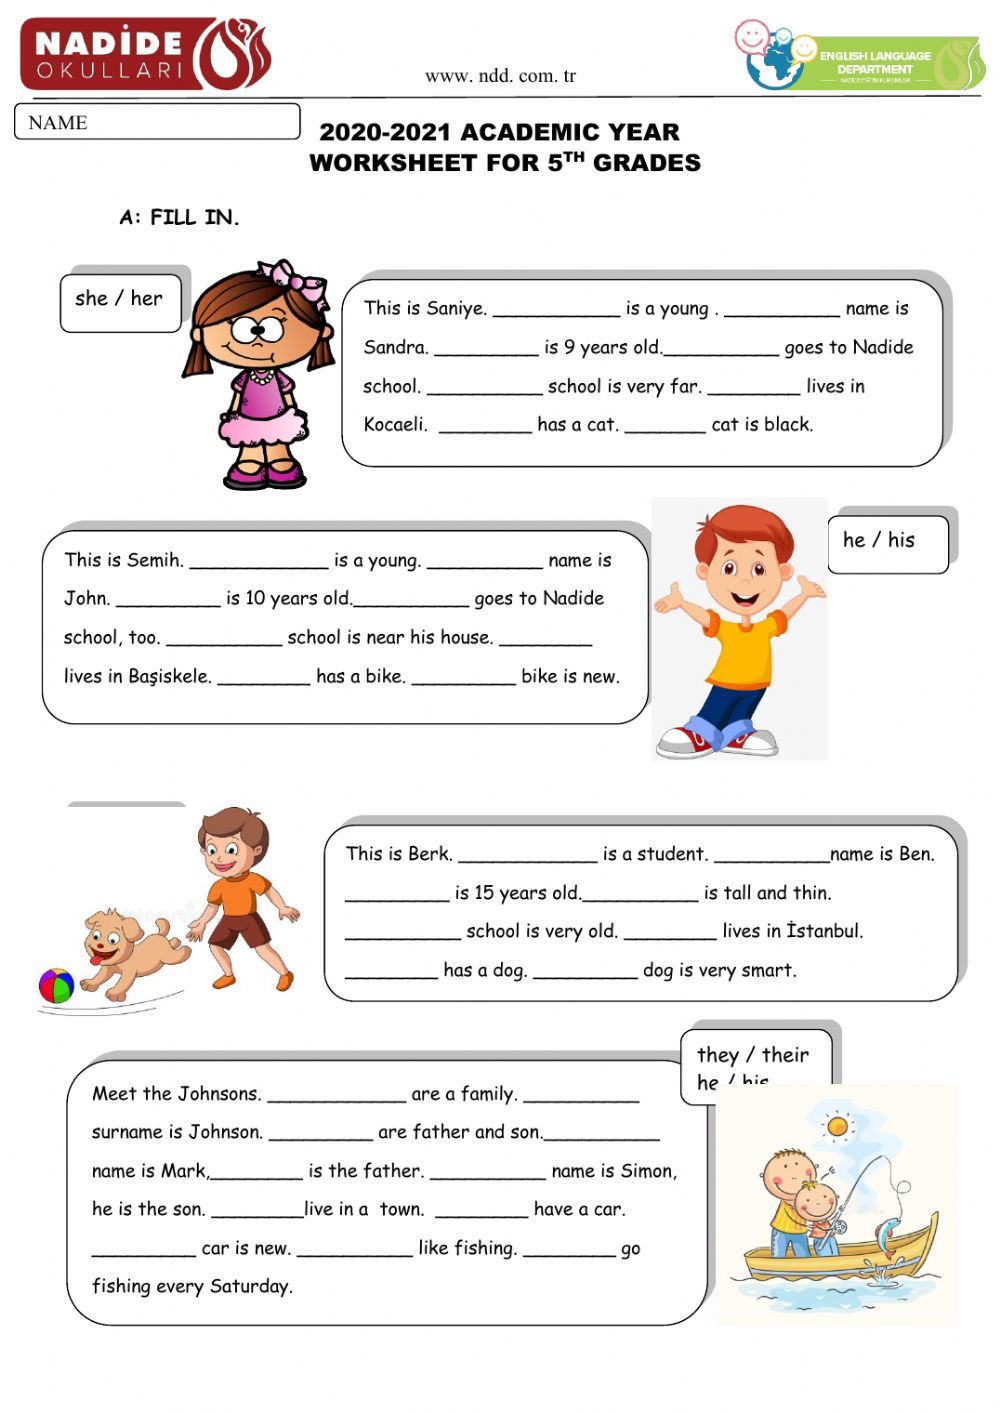 Ejercicio online de Possessive Adjectives para 5th Grades